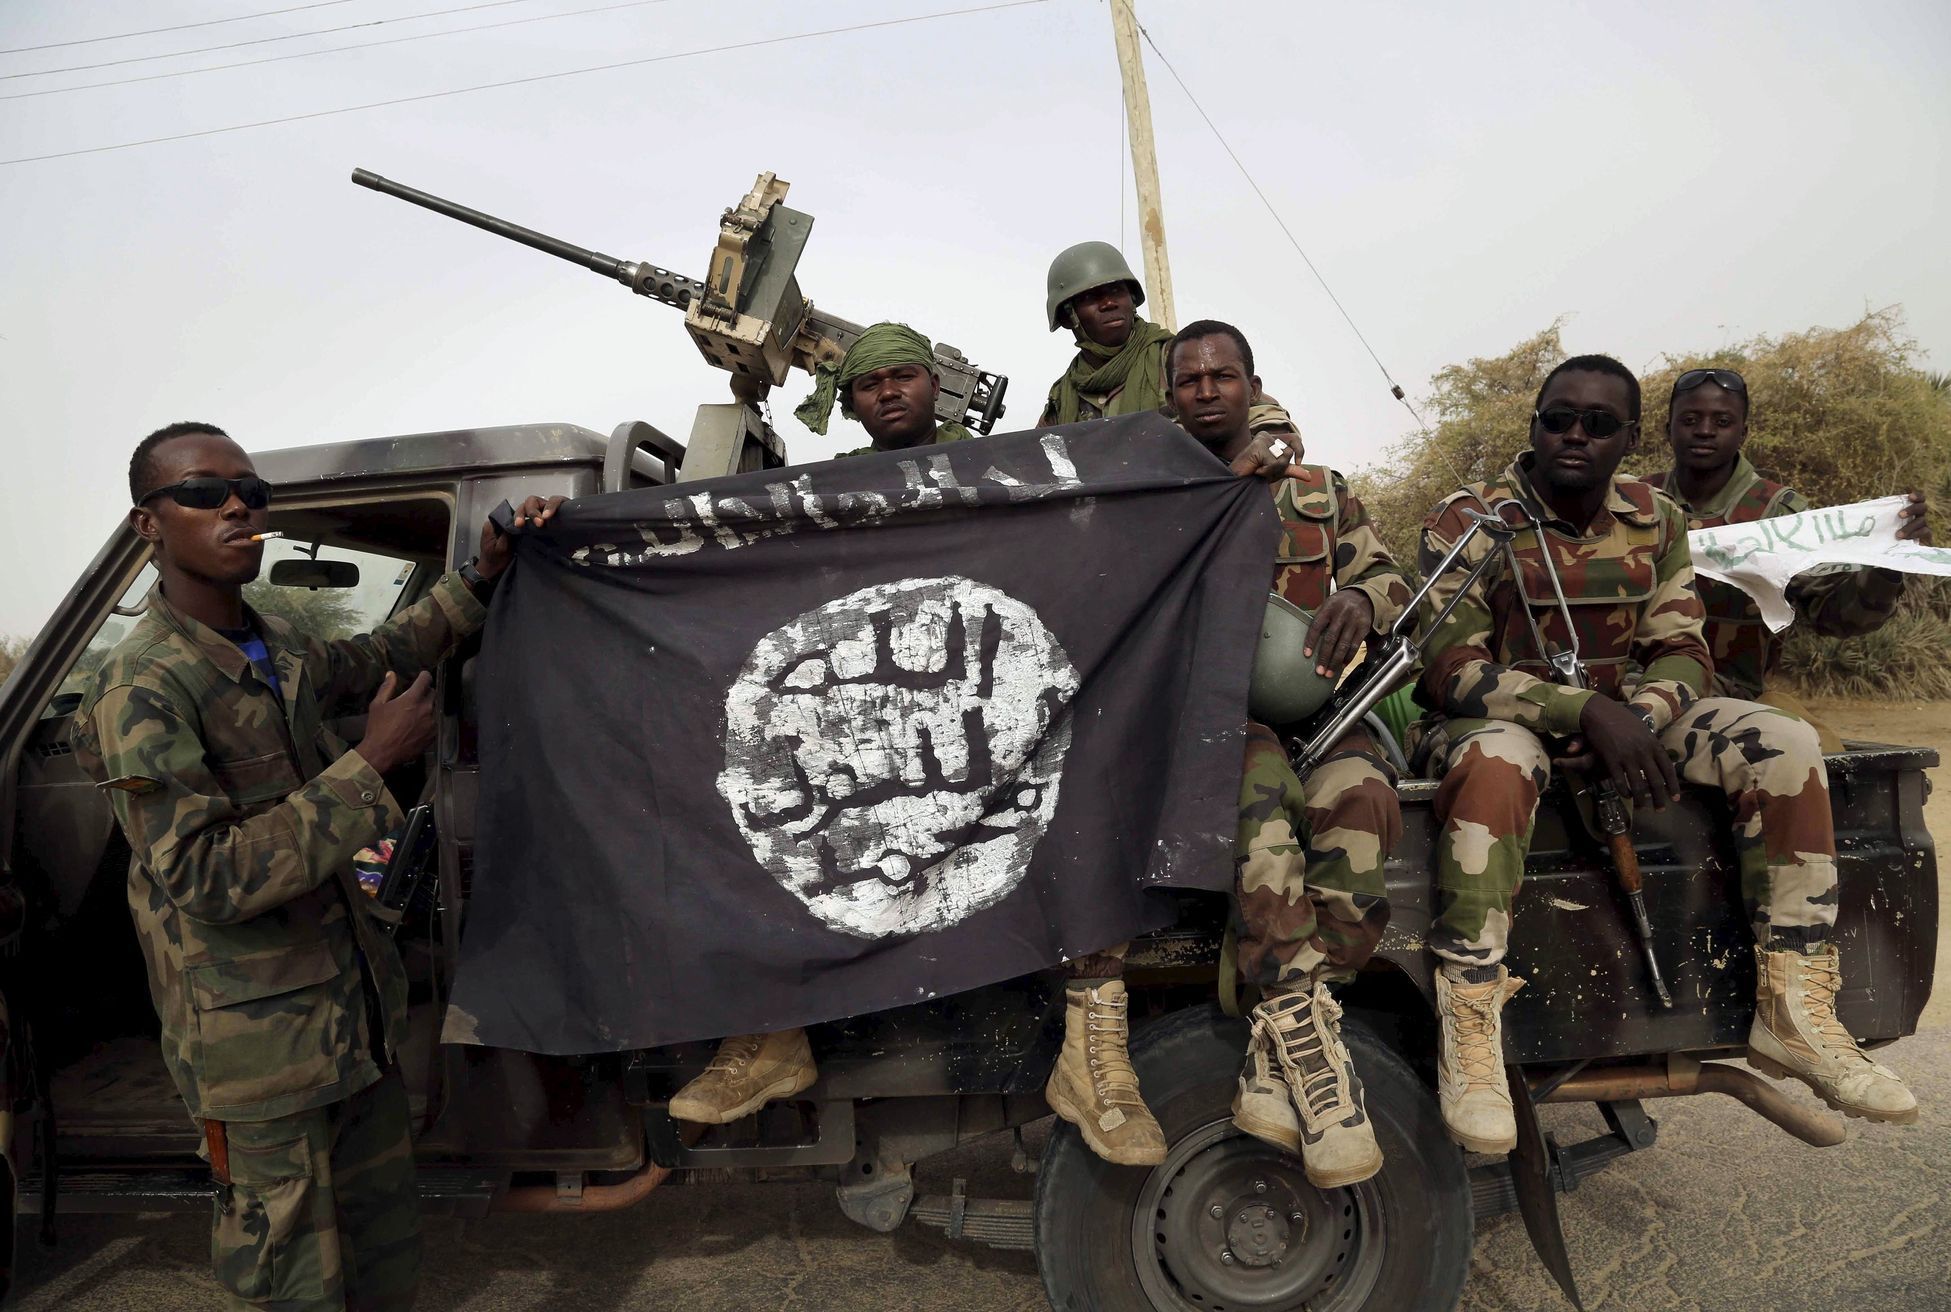 Vojáci nigerijské armády s ukořistěnou vlajkou Boko Haram.